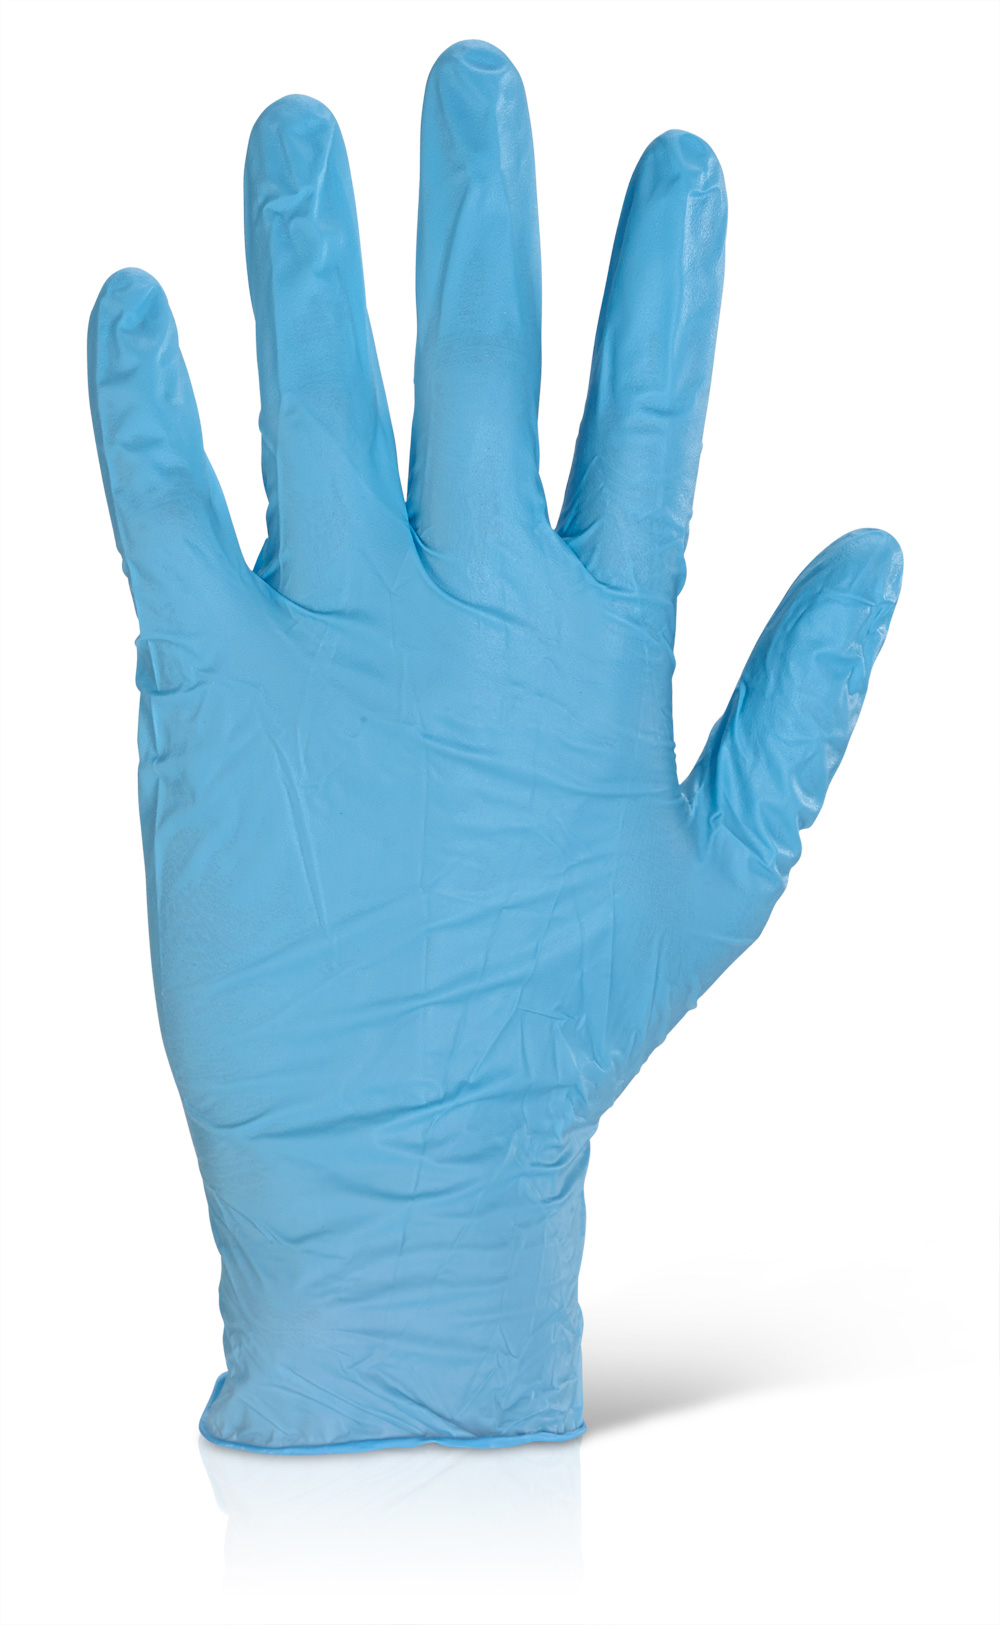 Nitrile Examination Gloves Powder Free